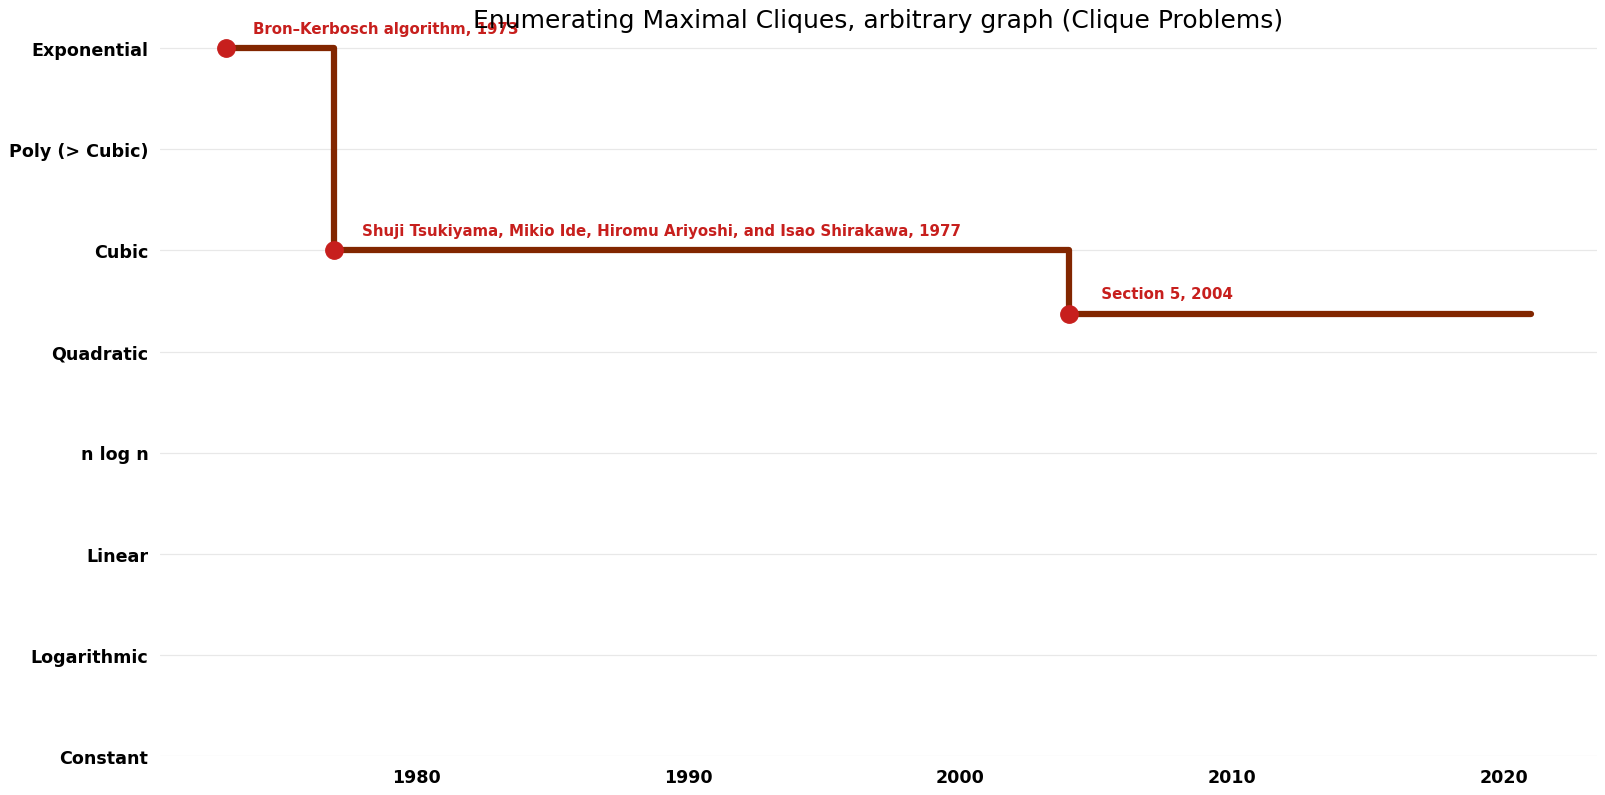 Clique Problems - Enumerating Maximal Cliques, arbitrary graph - Time.png